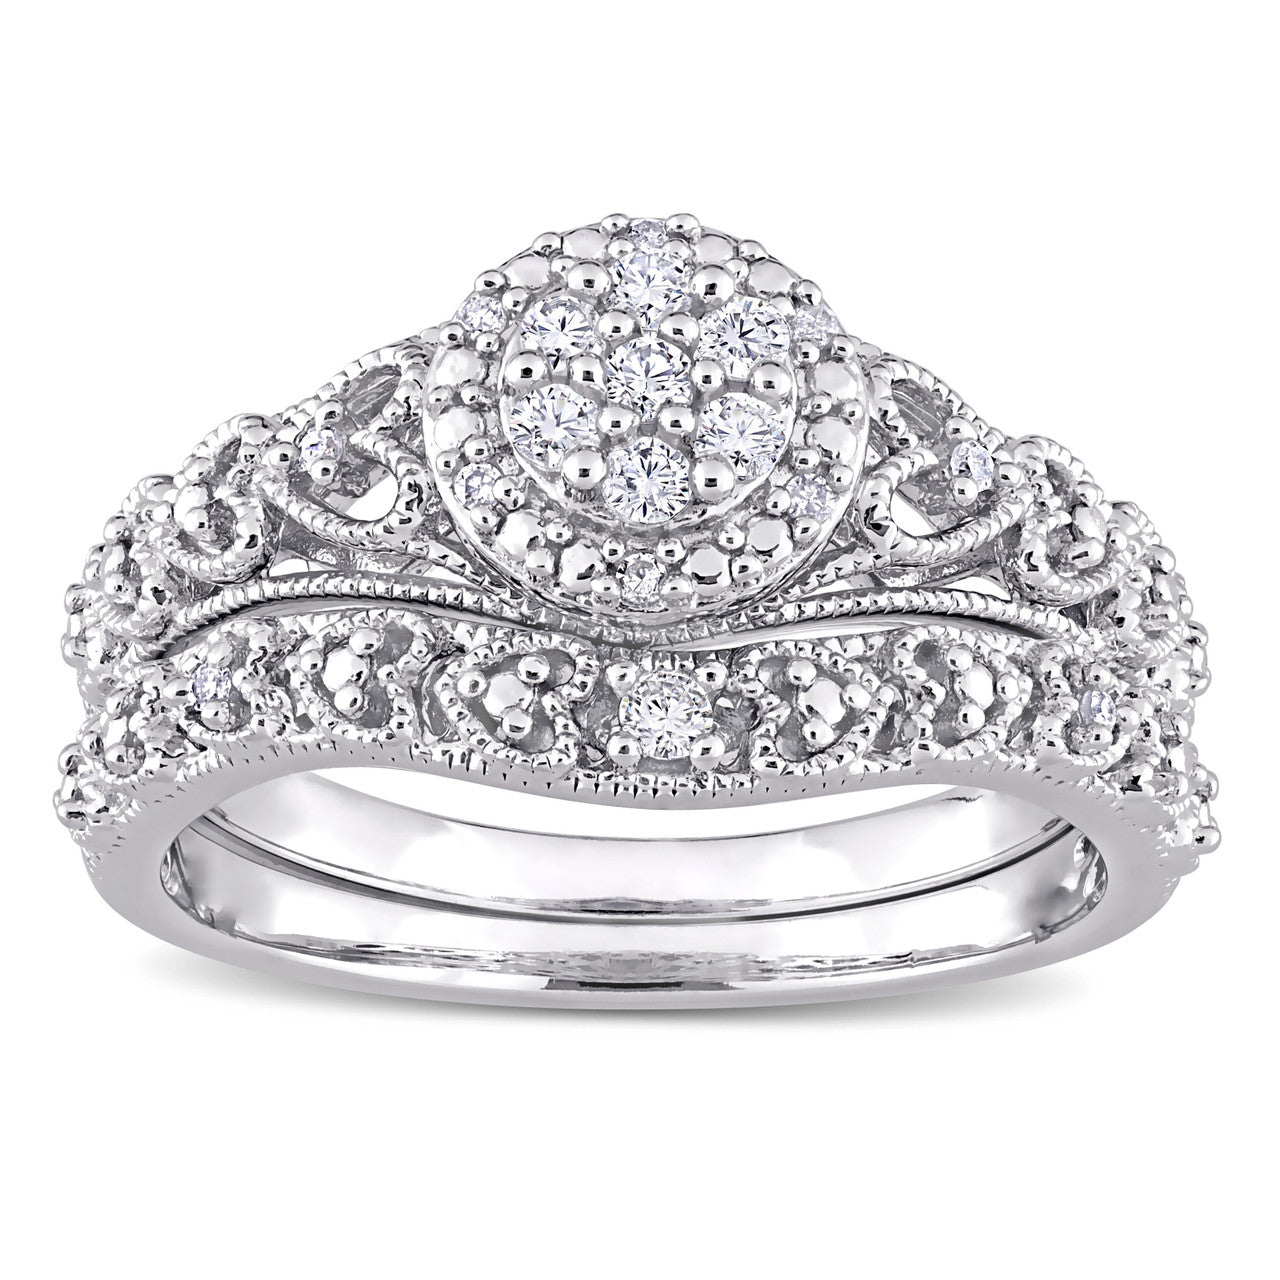 Ice Jewellery 1/5 CT TDW Diamond Bridal Set Ring in Sterling Silver - 75000005414 | Ice Jewellery Australia